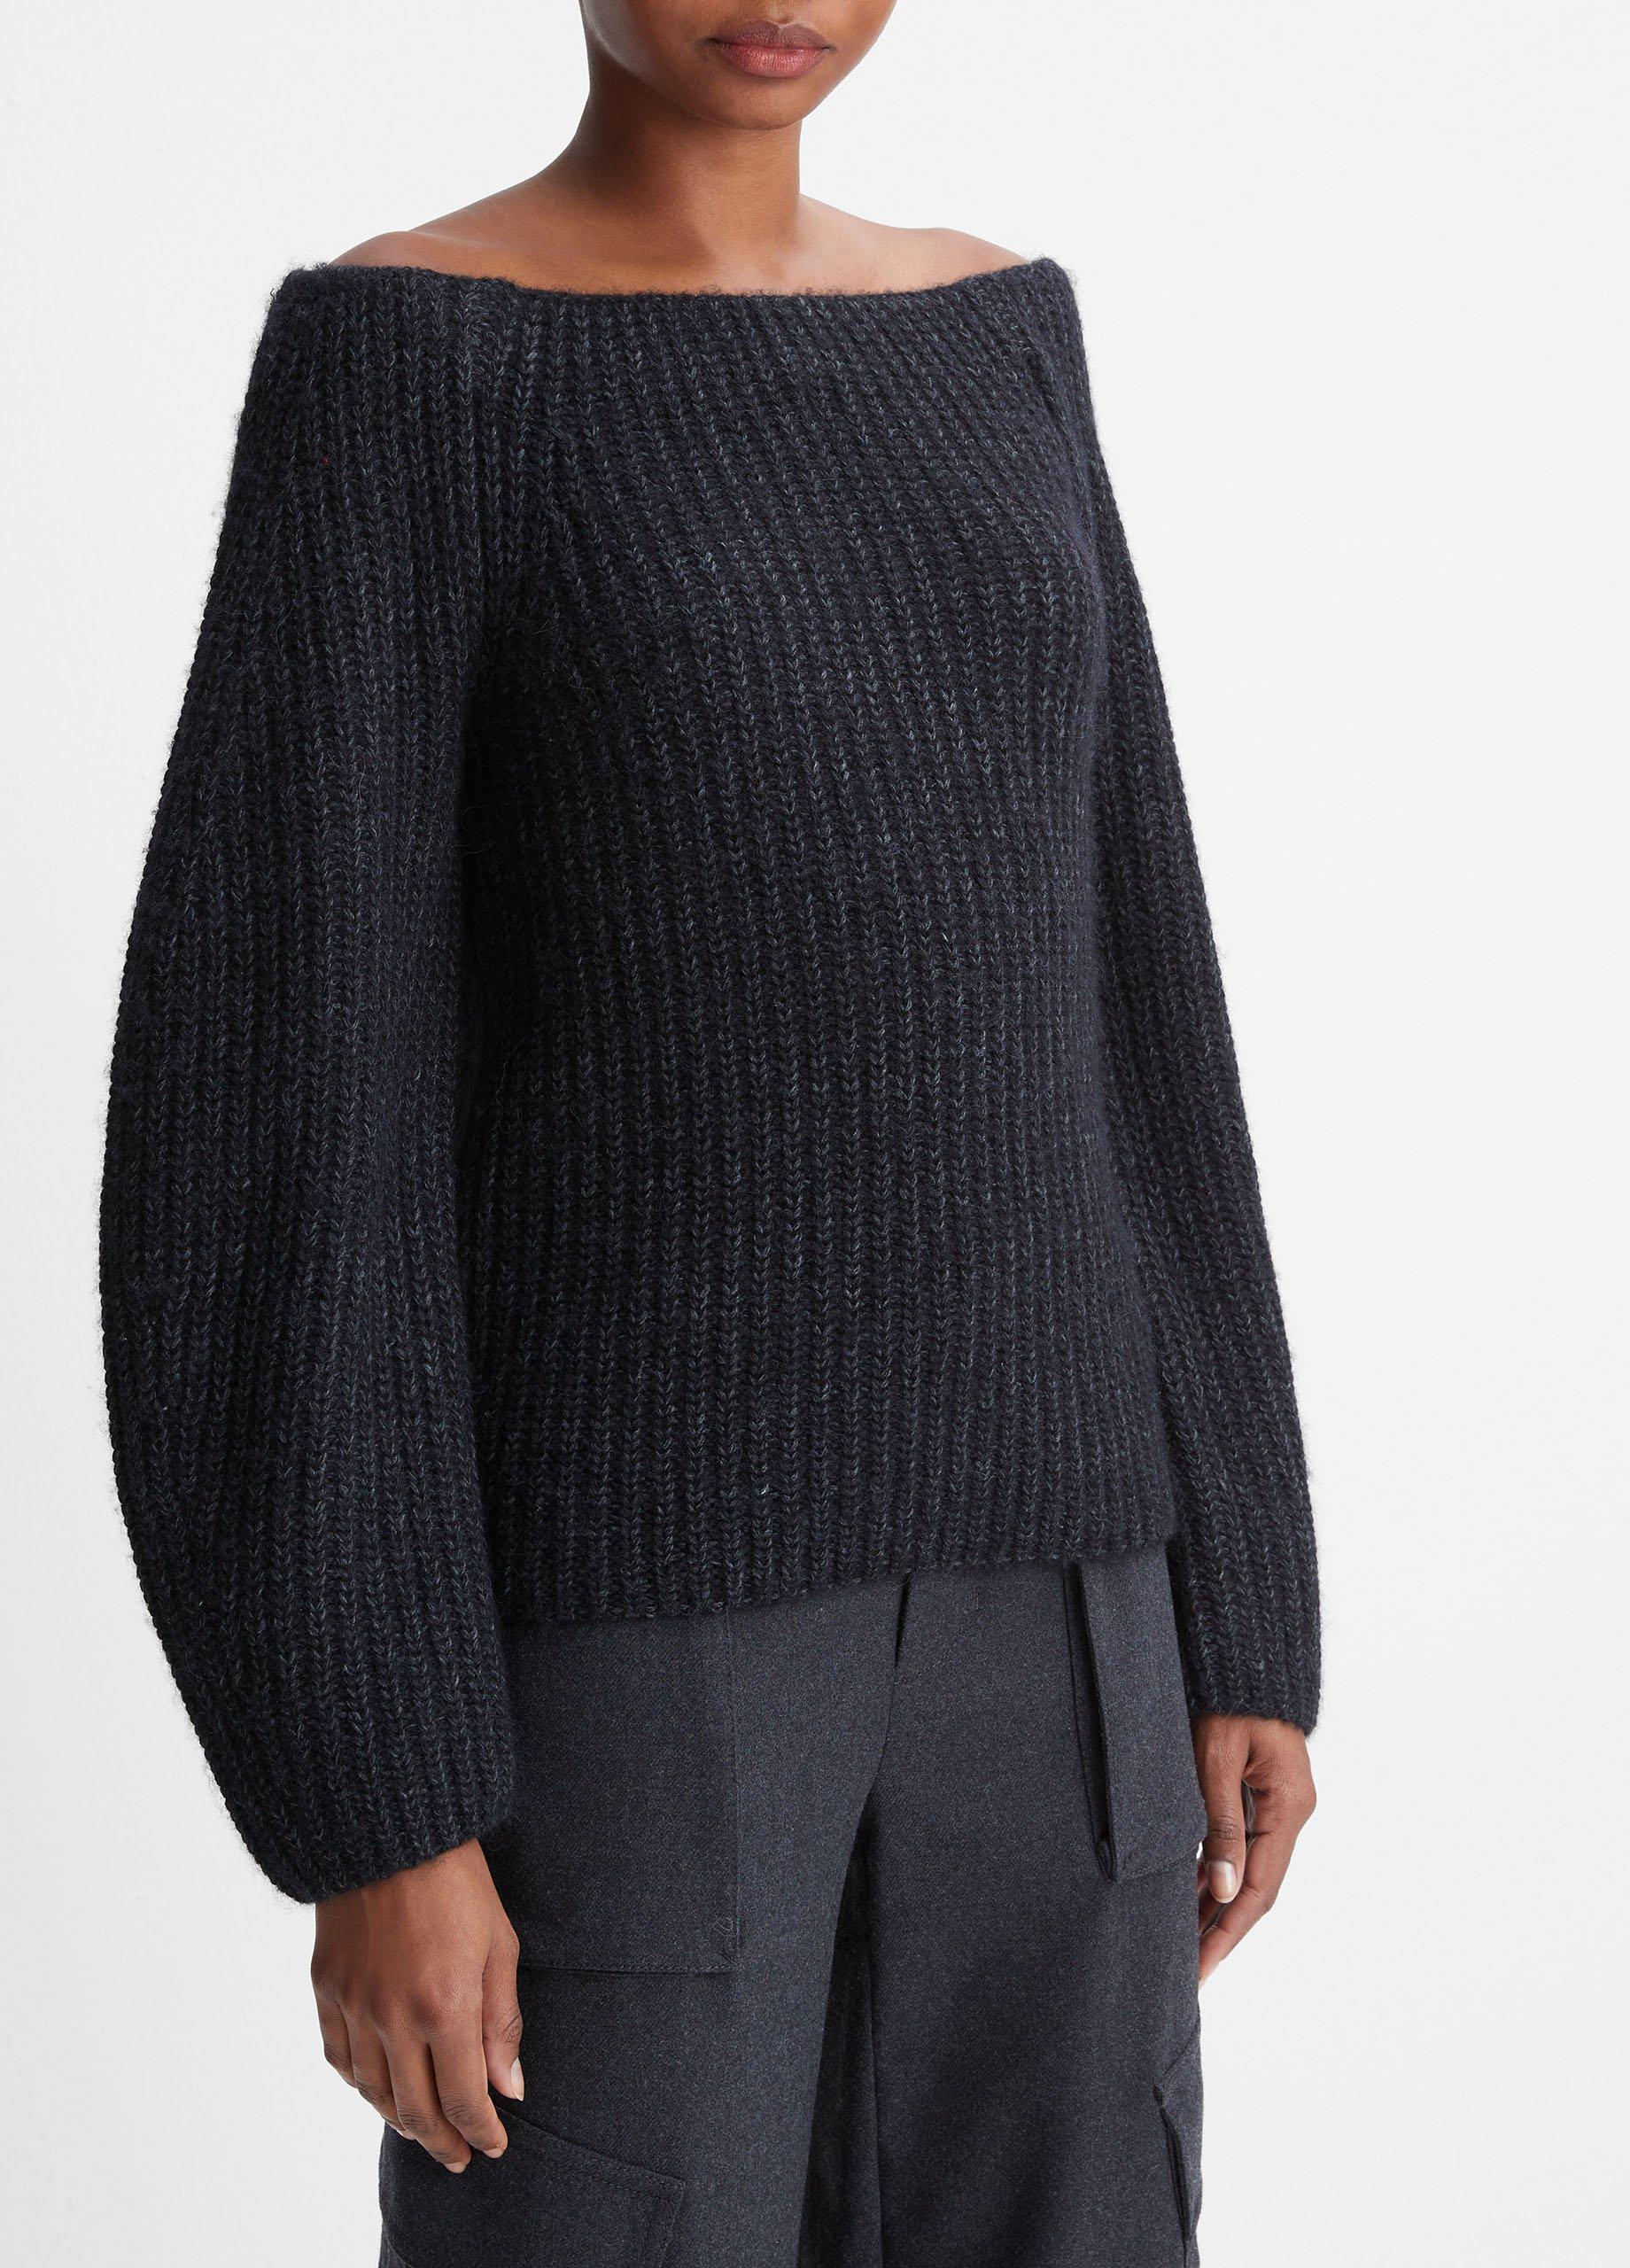 Marled Off-The-Shoulder Sweater